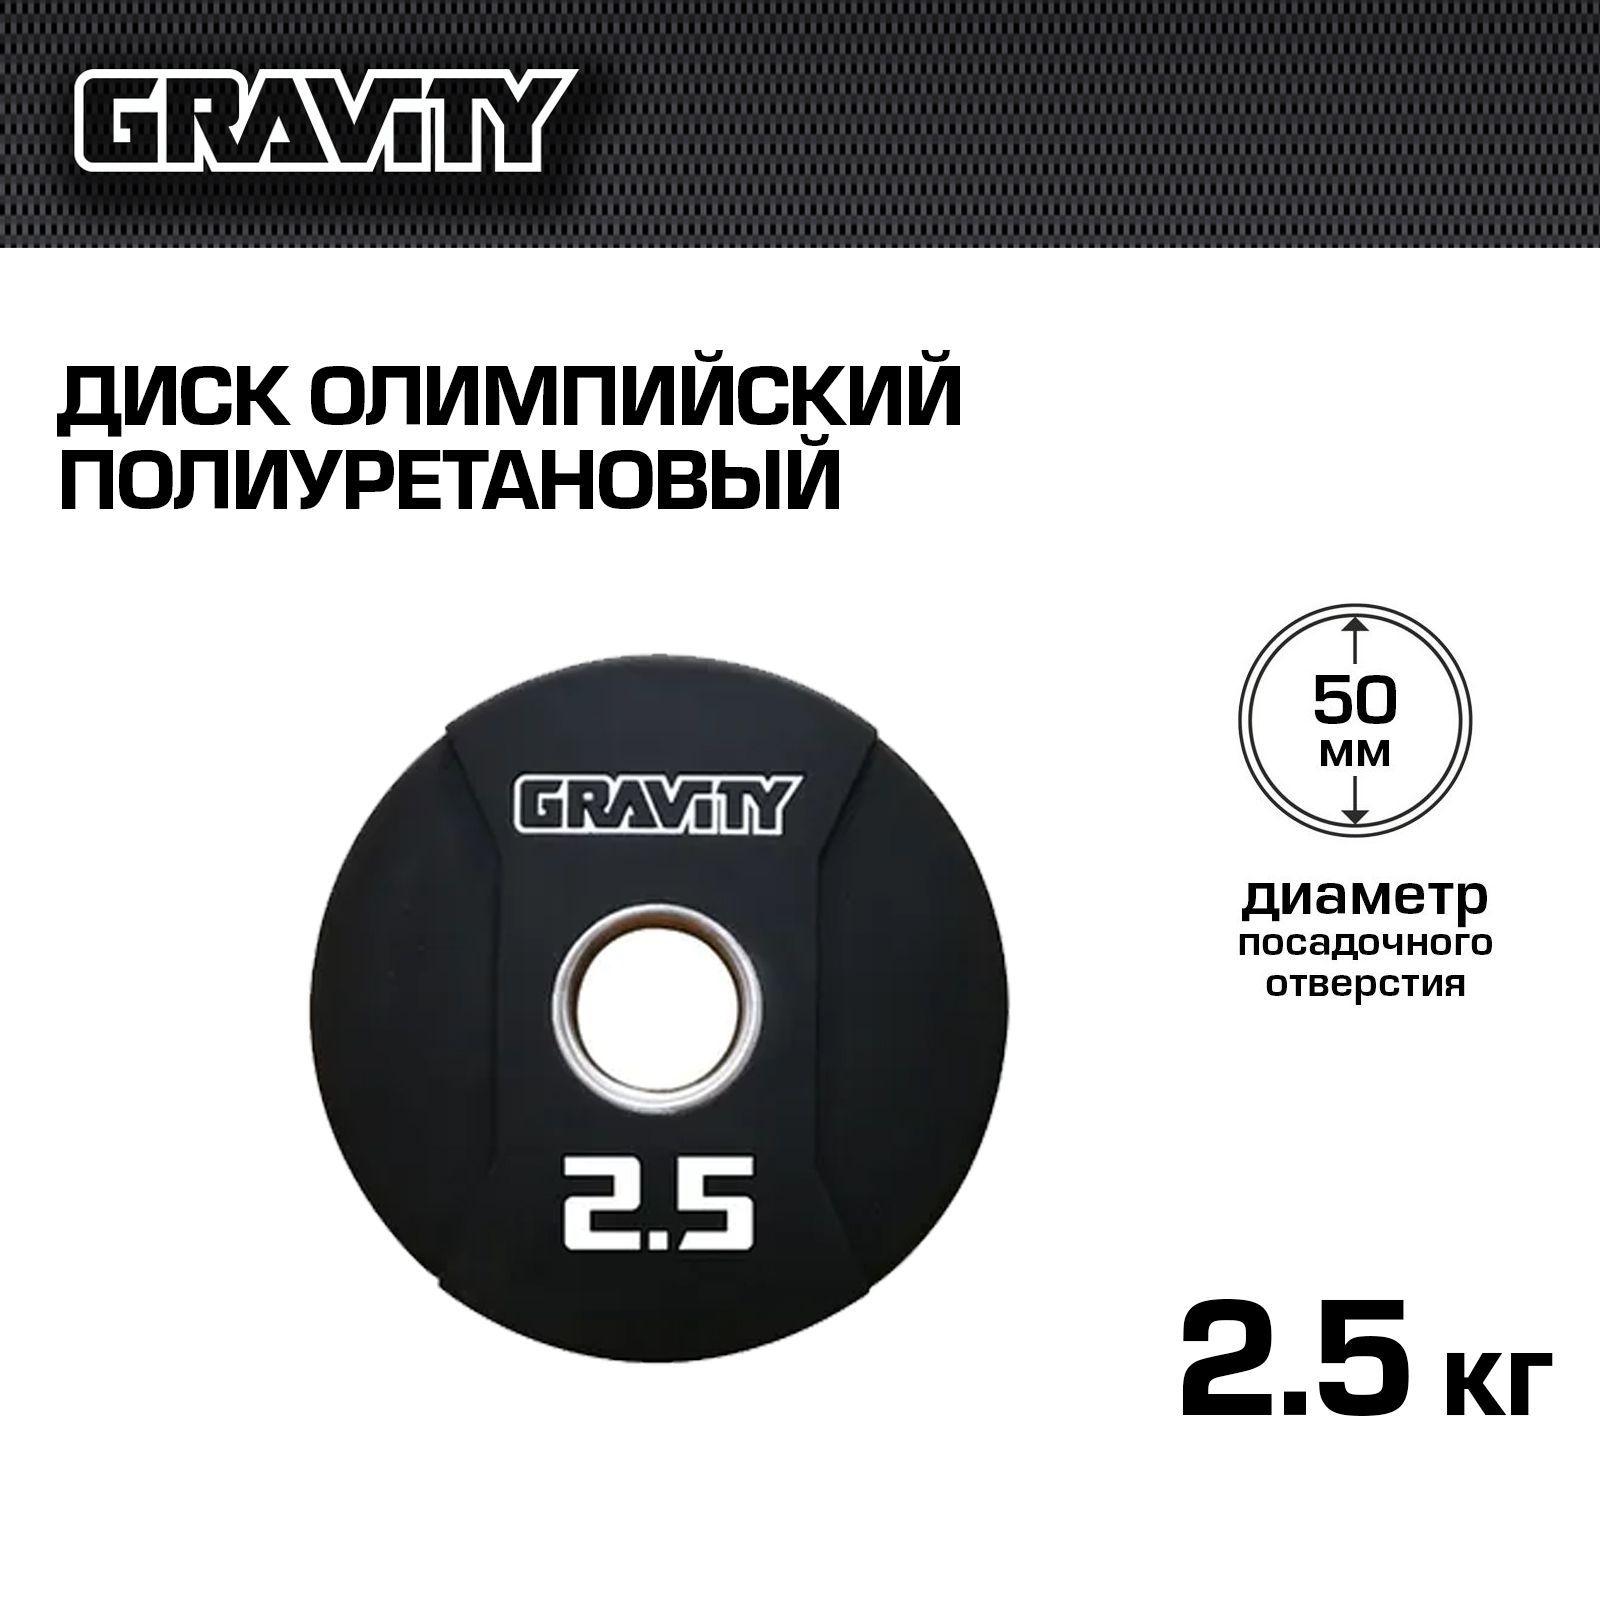 Gravity | Диск олимпийский полиуретановый Gravity, 2,5 кг